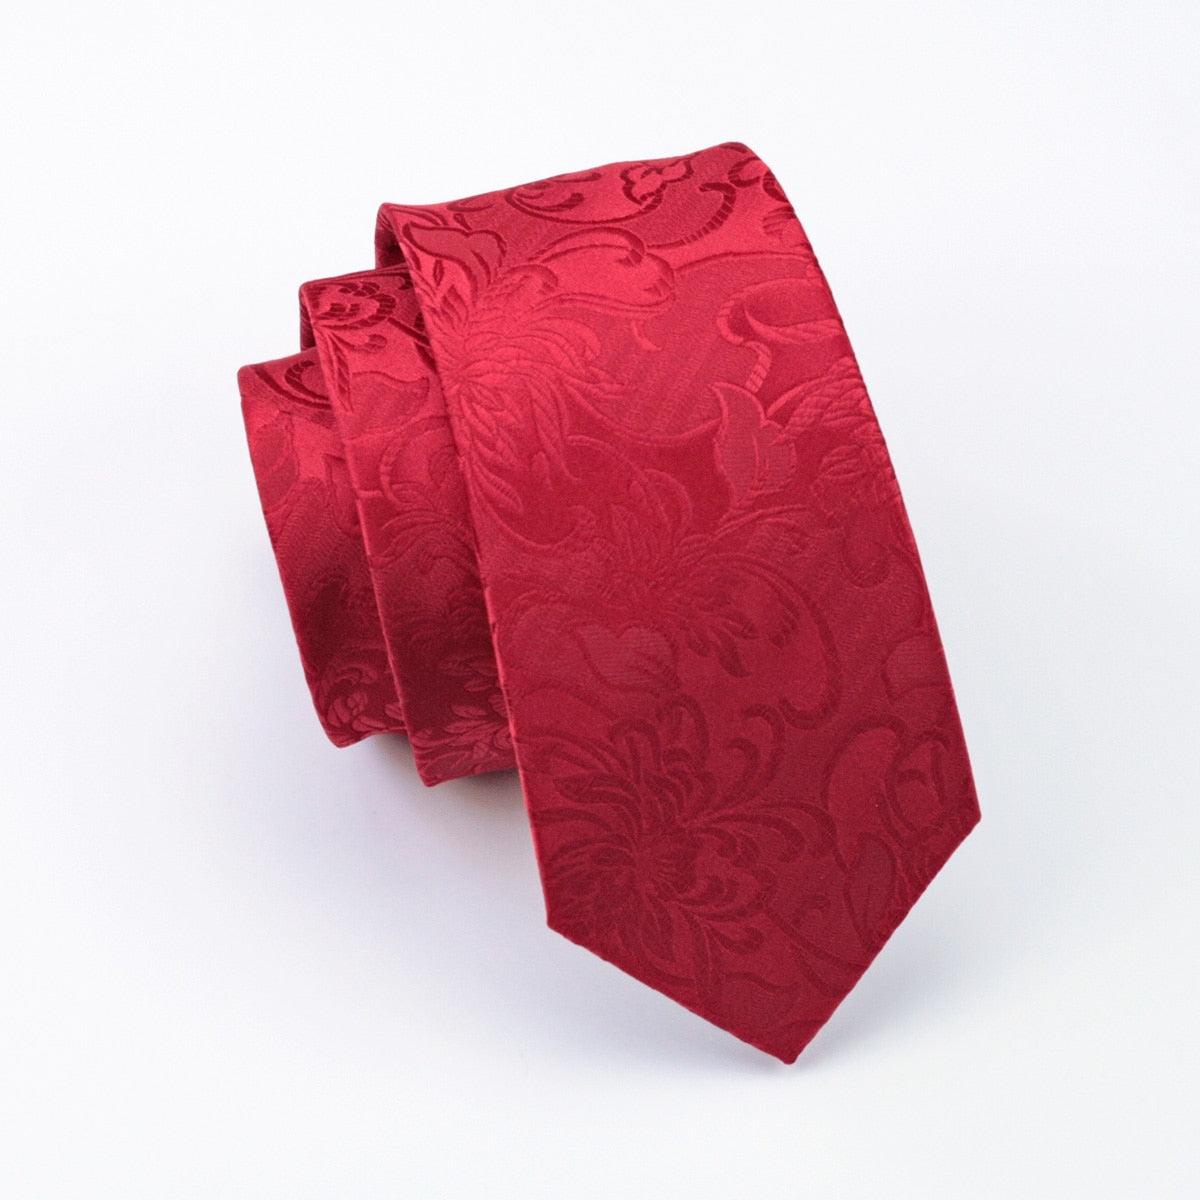 Great Men's Tie - Floral Silk Jacquard Woven Classic Tie - Hanky Cufflinks Set (2U17)